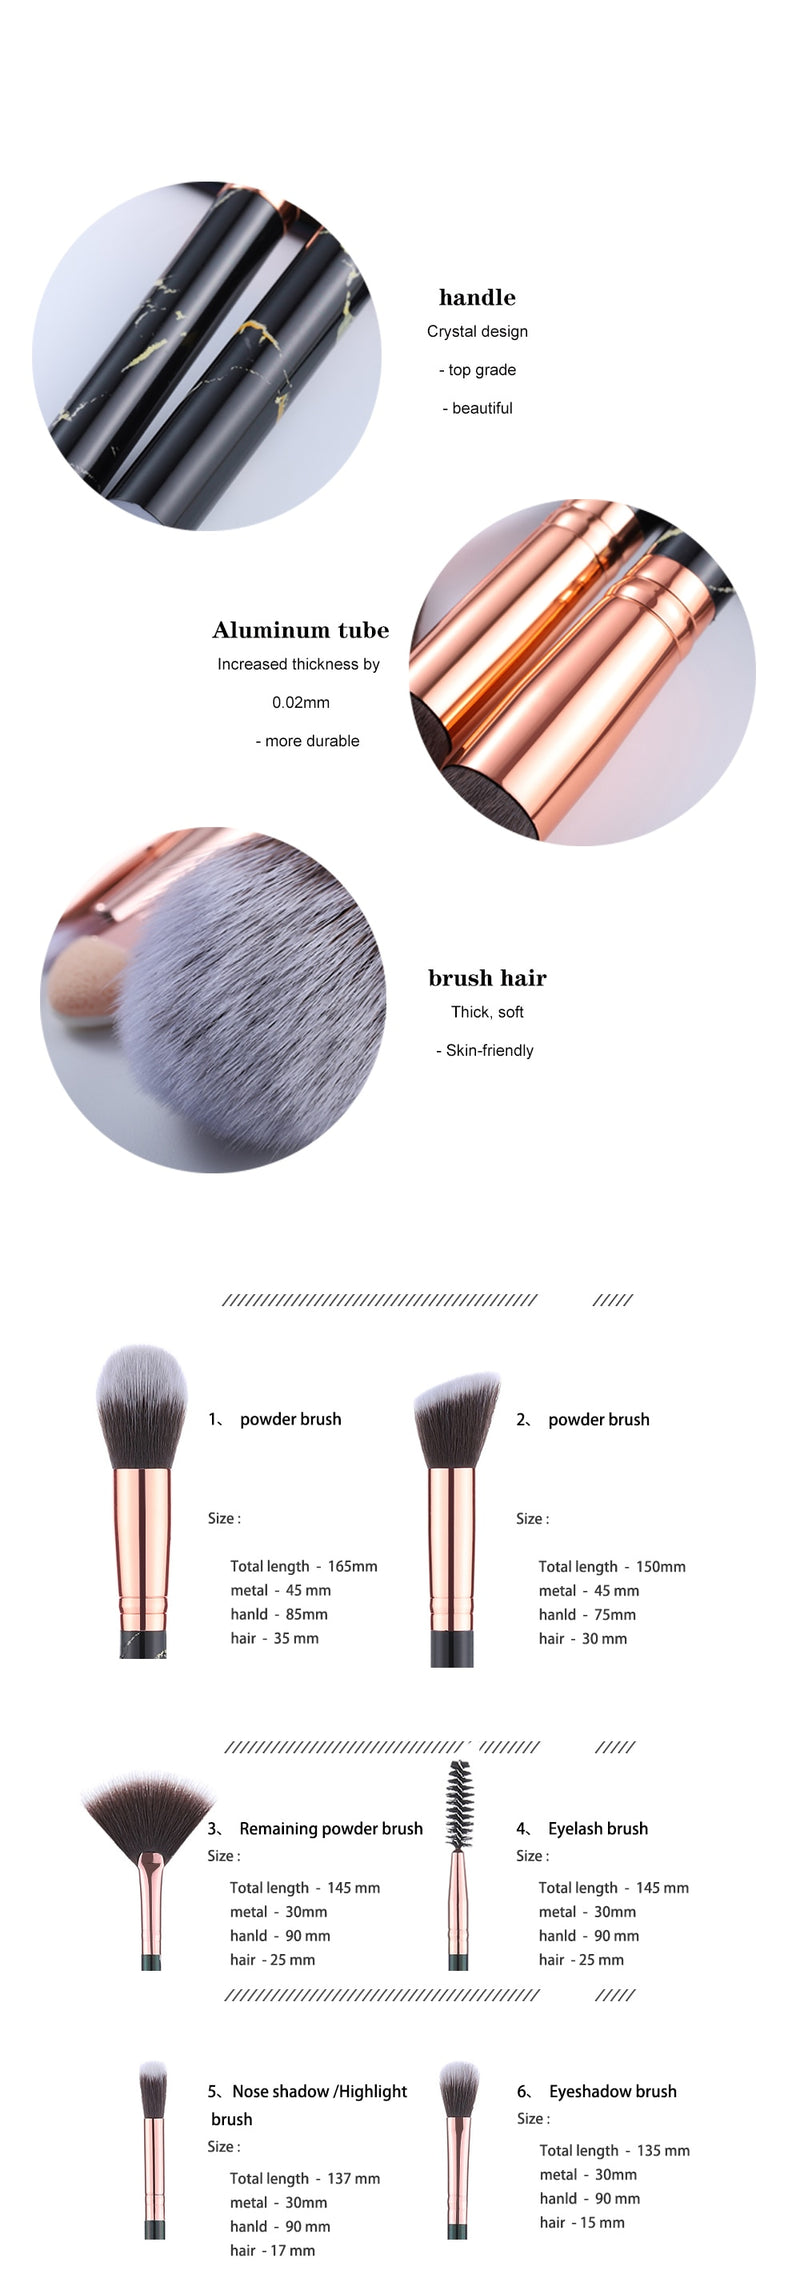 5/15Pcs Makeup Brushes Tool Set Cosmetic Powder Eye Shadow Foundation Blush Blending Beauty Make Up Brush Maquiagem